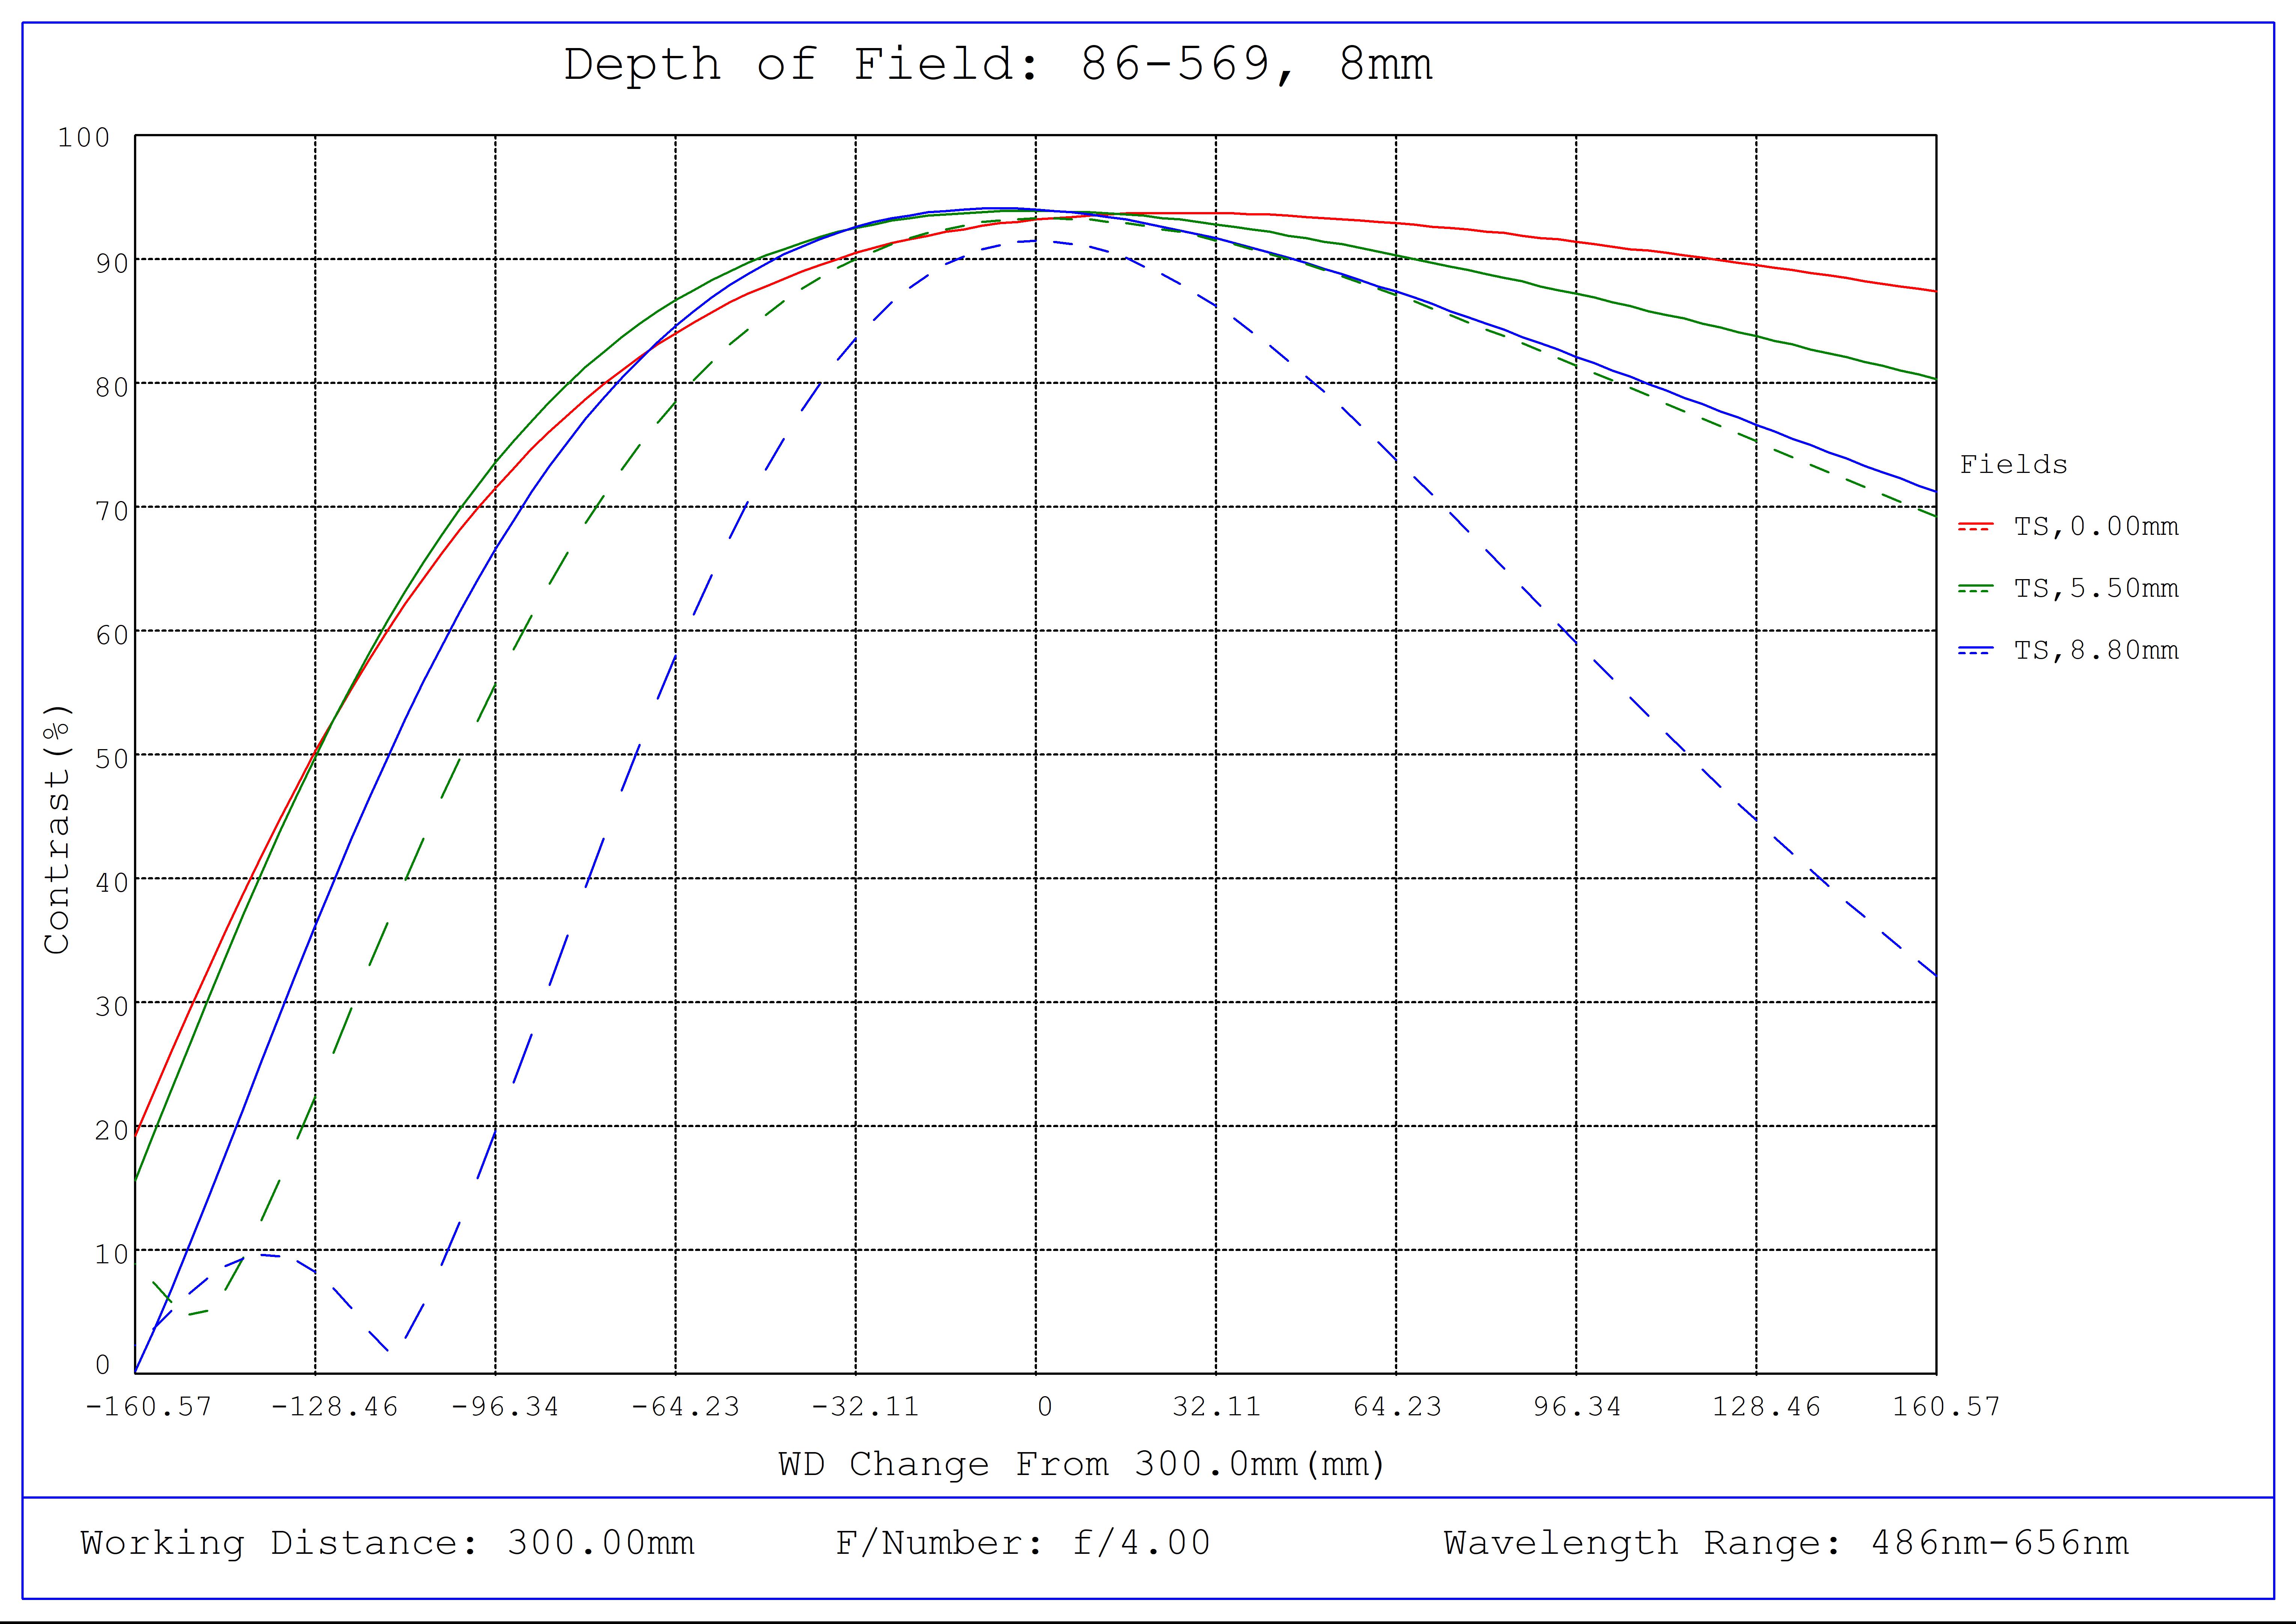 #86-569, 8mm Focal Length, HP Series Fixed Focal Length Lens, Depth of Field Plot, 300mm Working Distance, f4